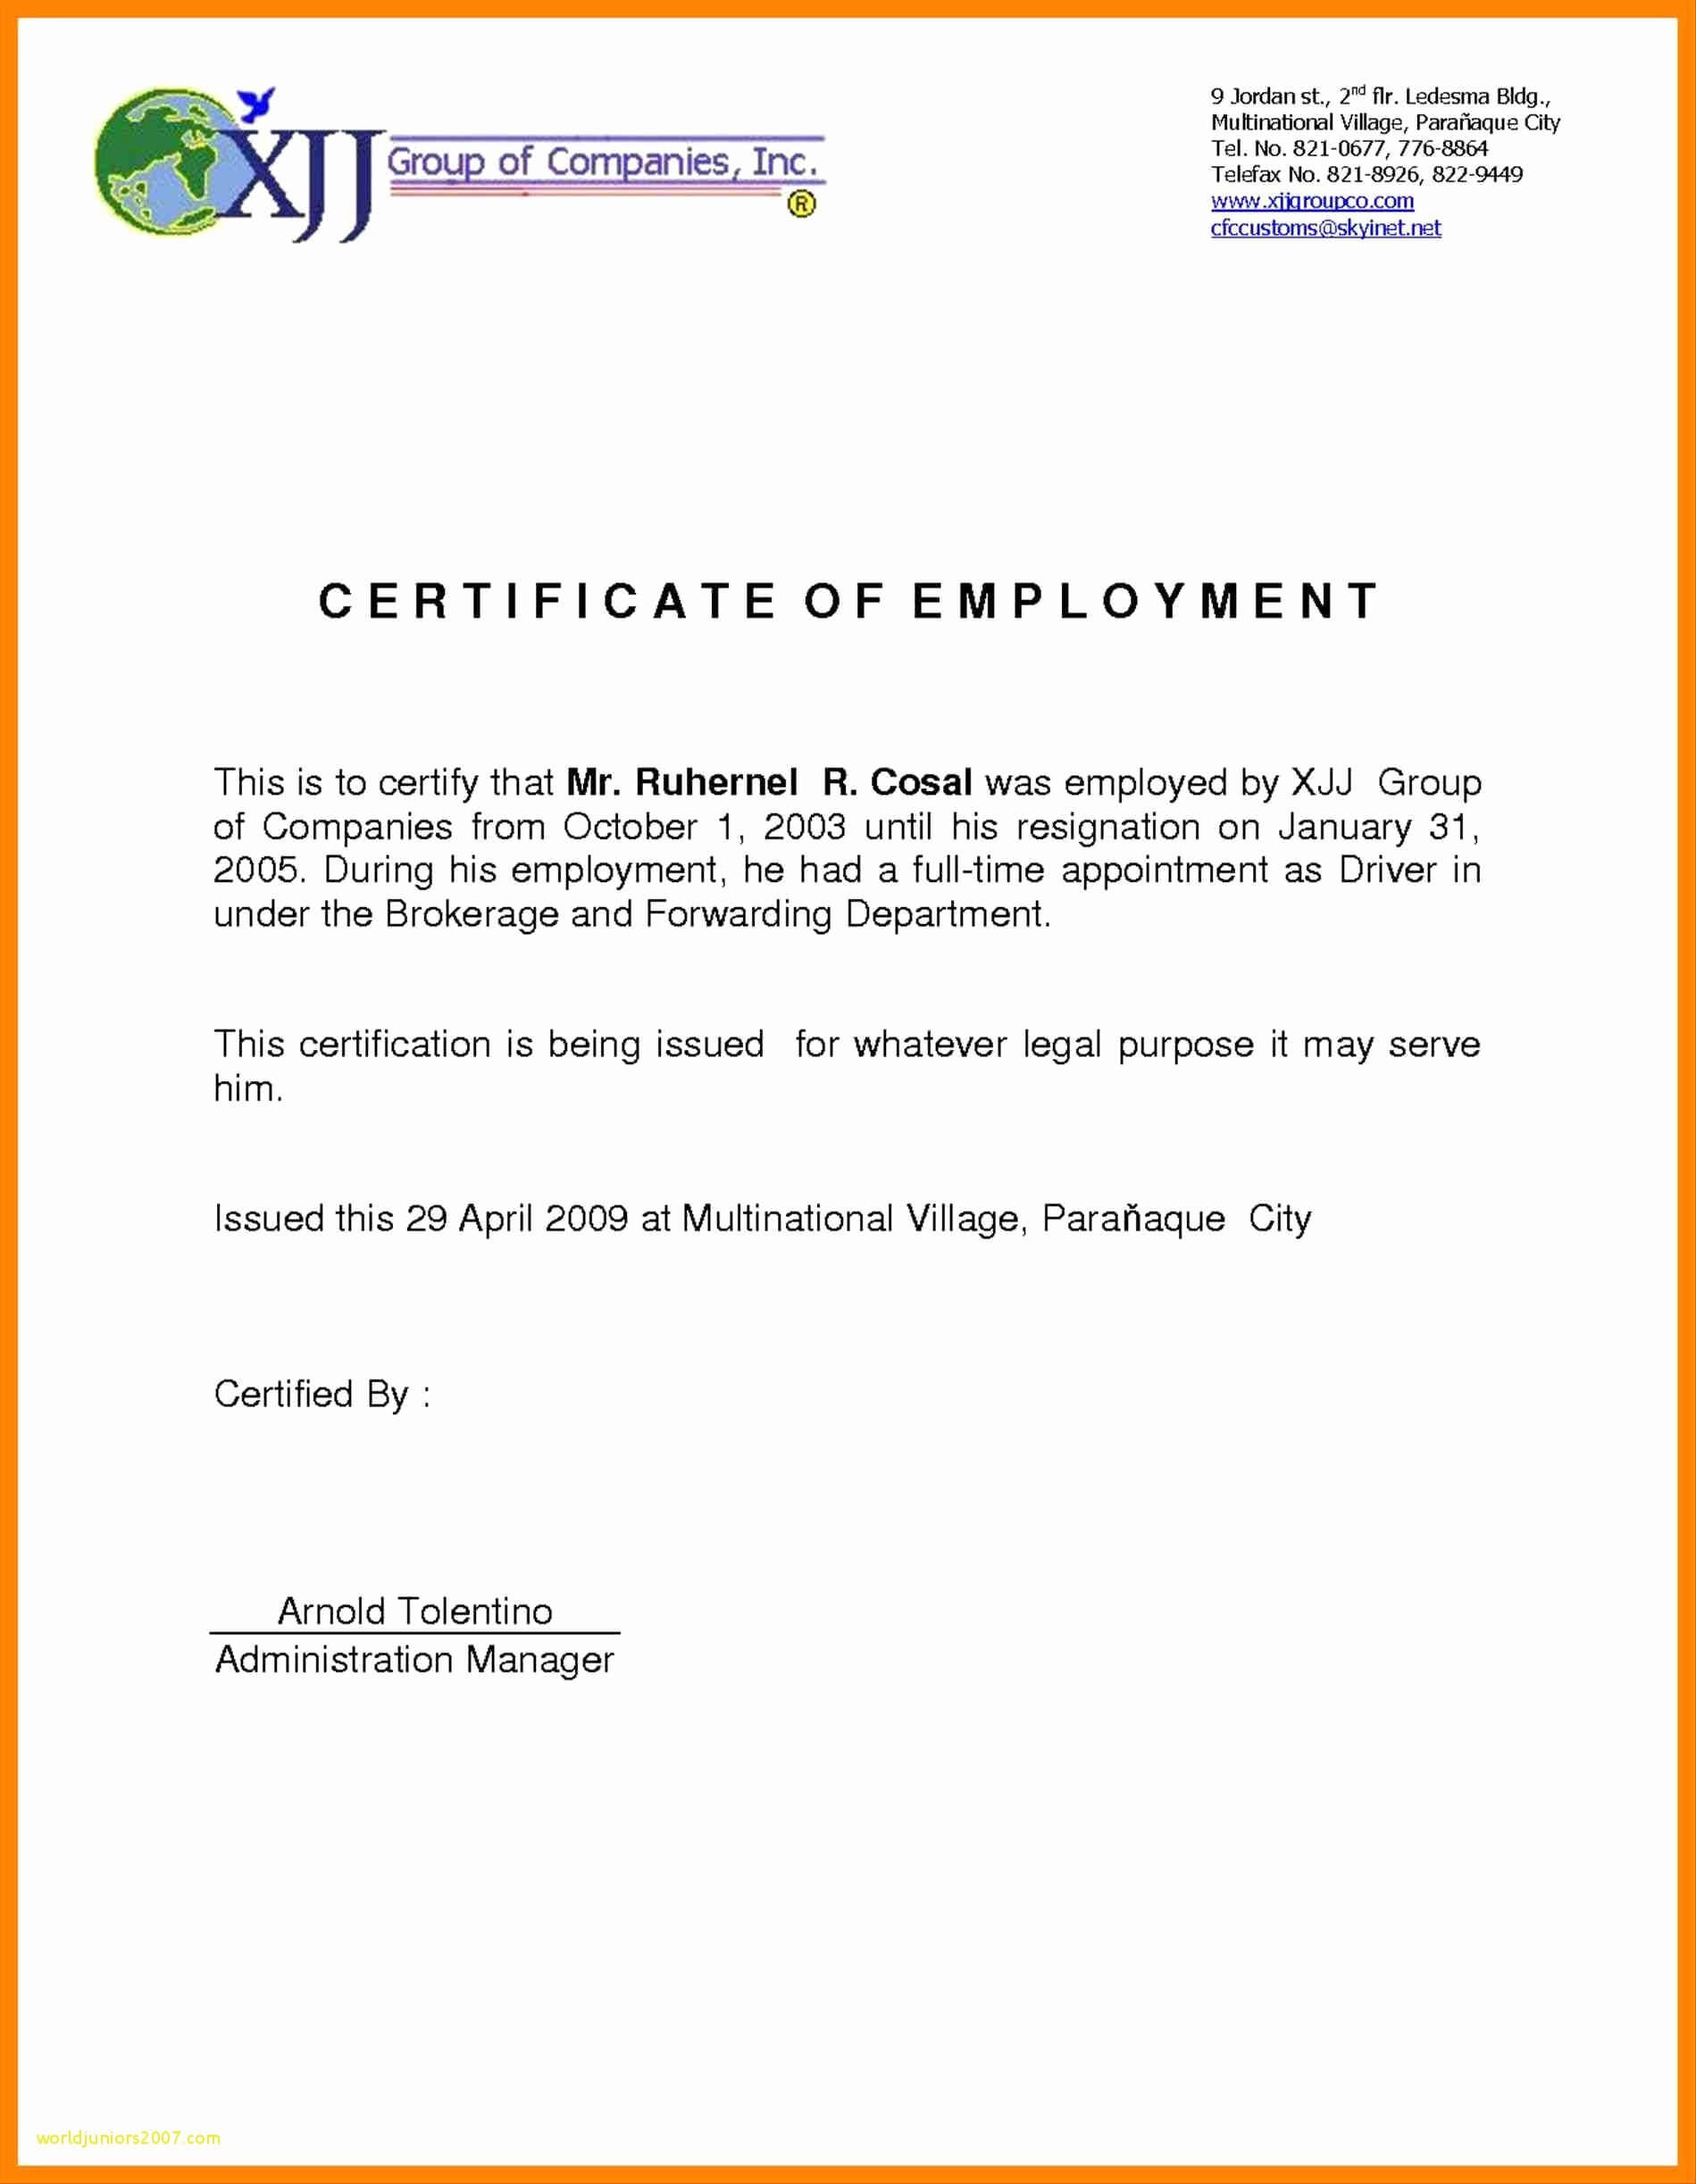 029 Certificate Of Employment Template Impressive Ideas Throughout Certificate Of Employment Template